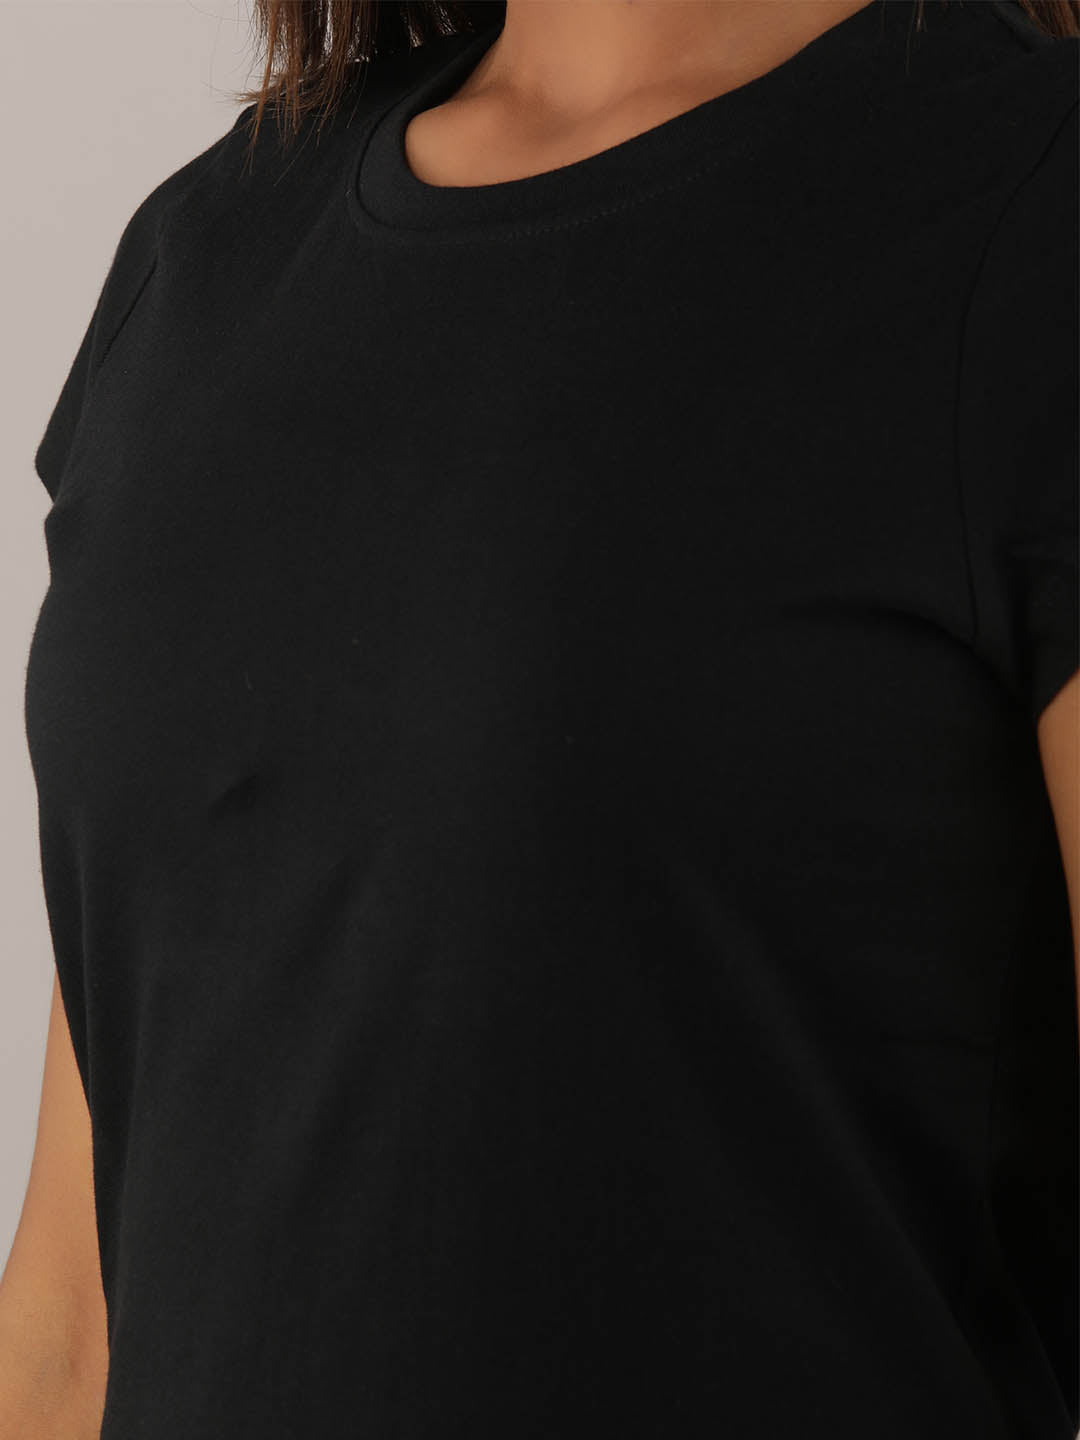 PLAIN BLACK T-SHIRT DRESS